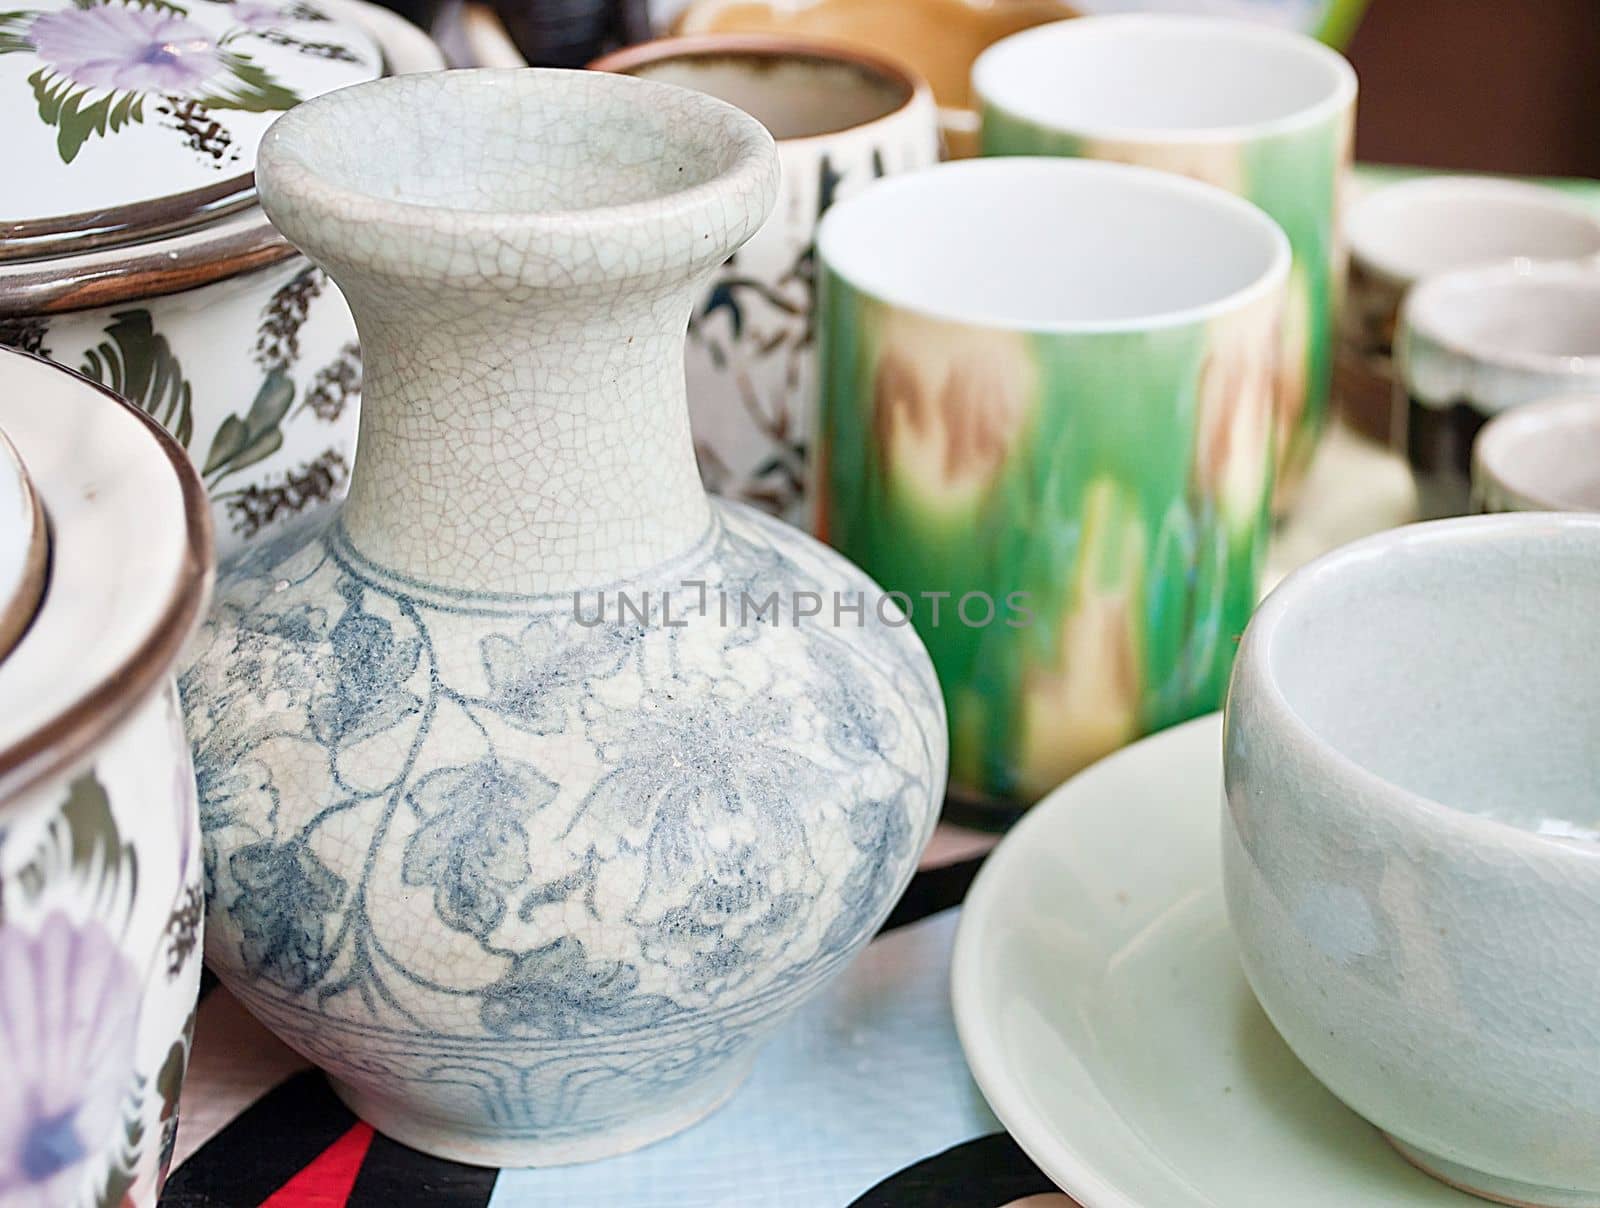 enamel plates, bowls and mugs stacked by rakoptonLPN